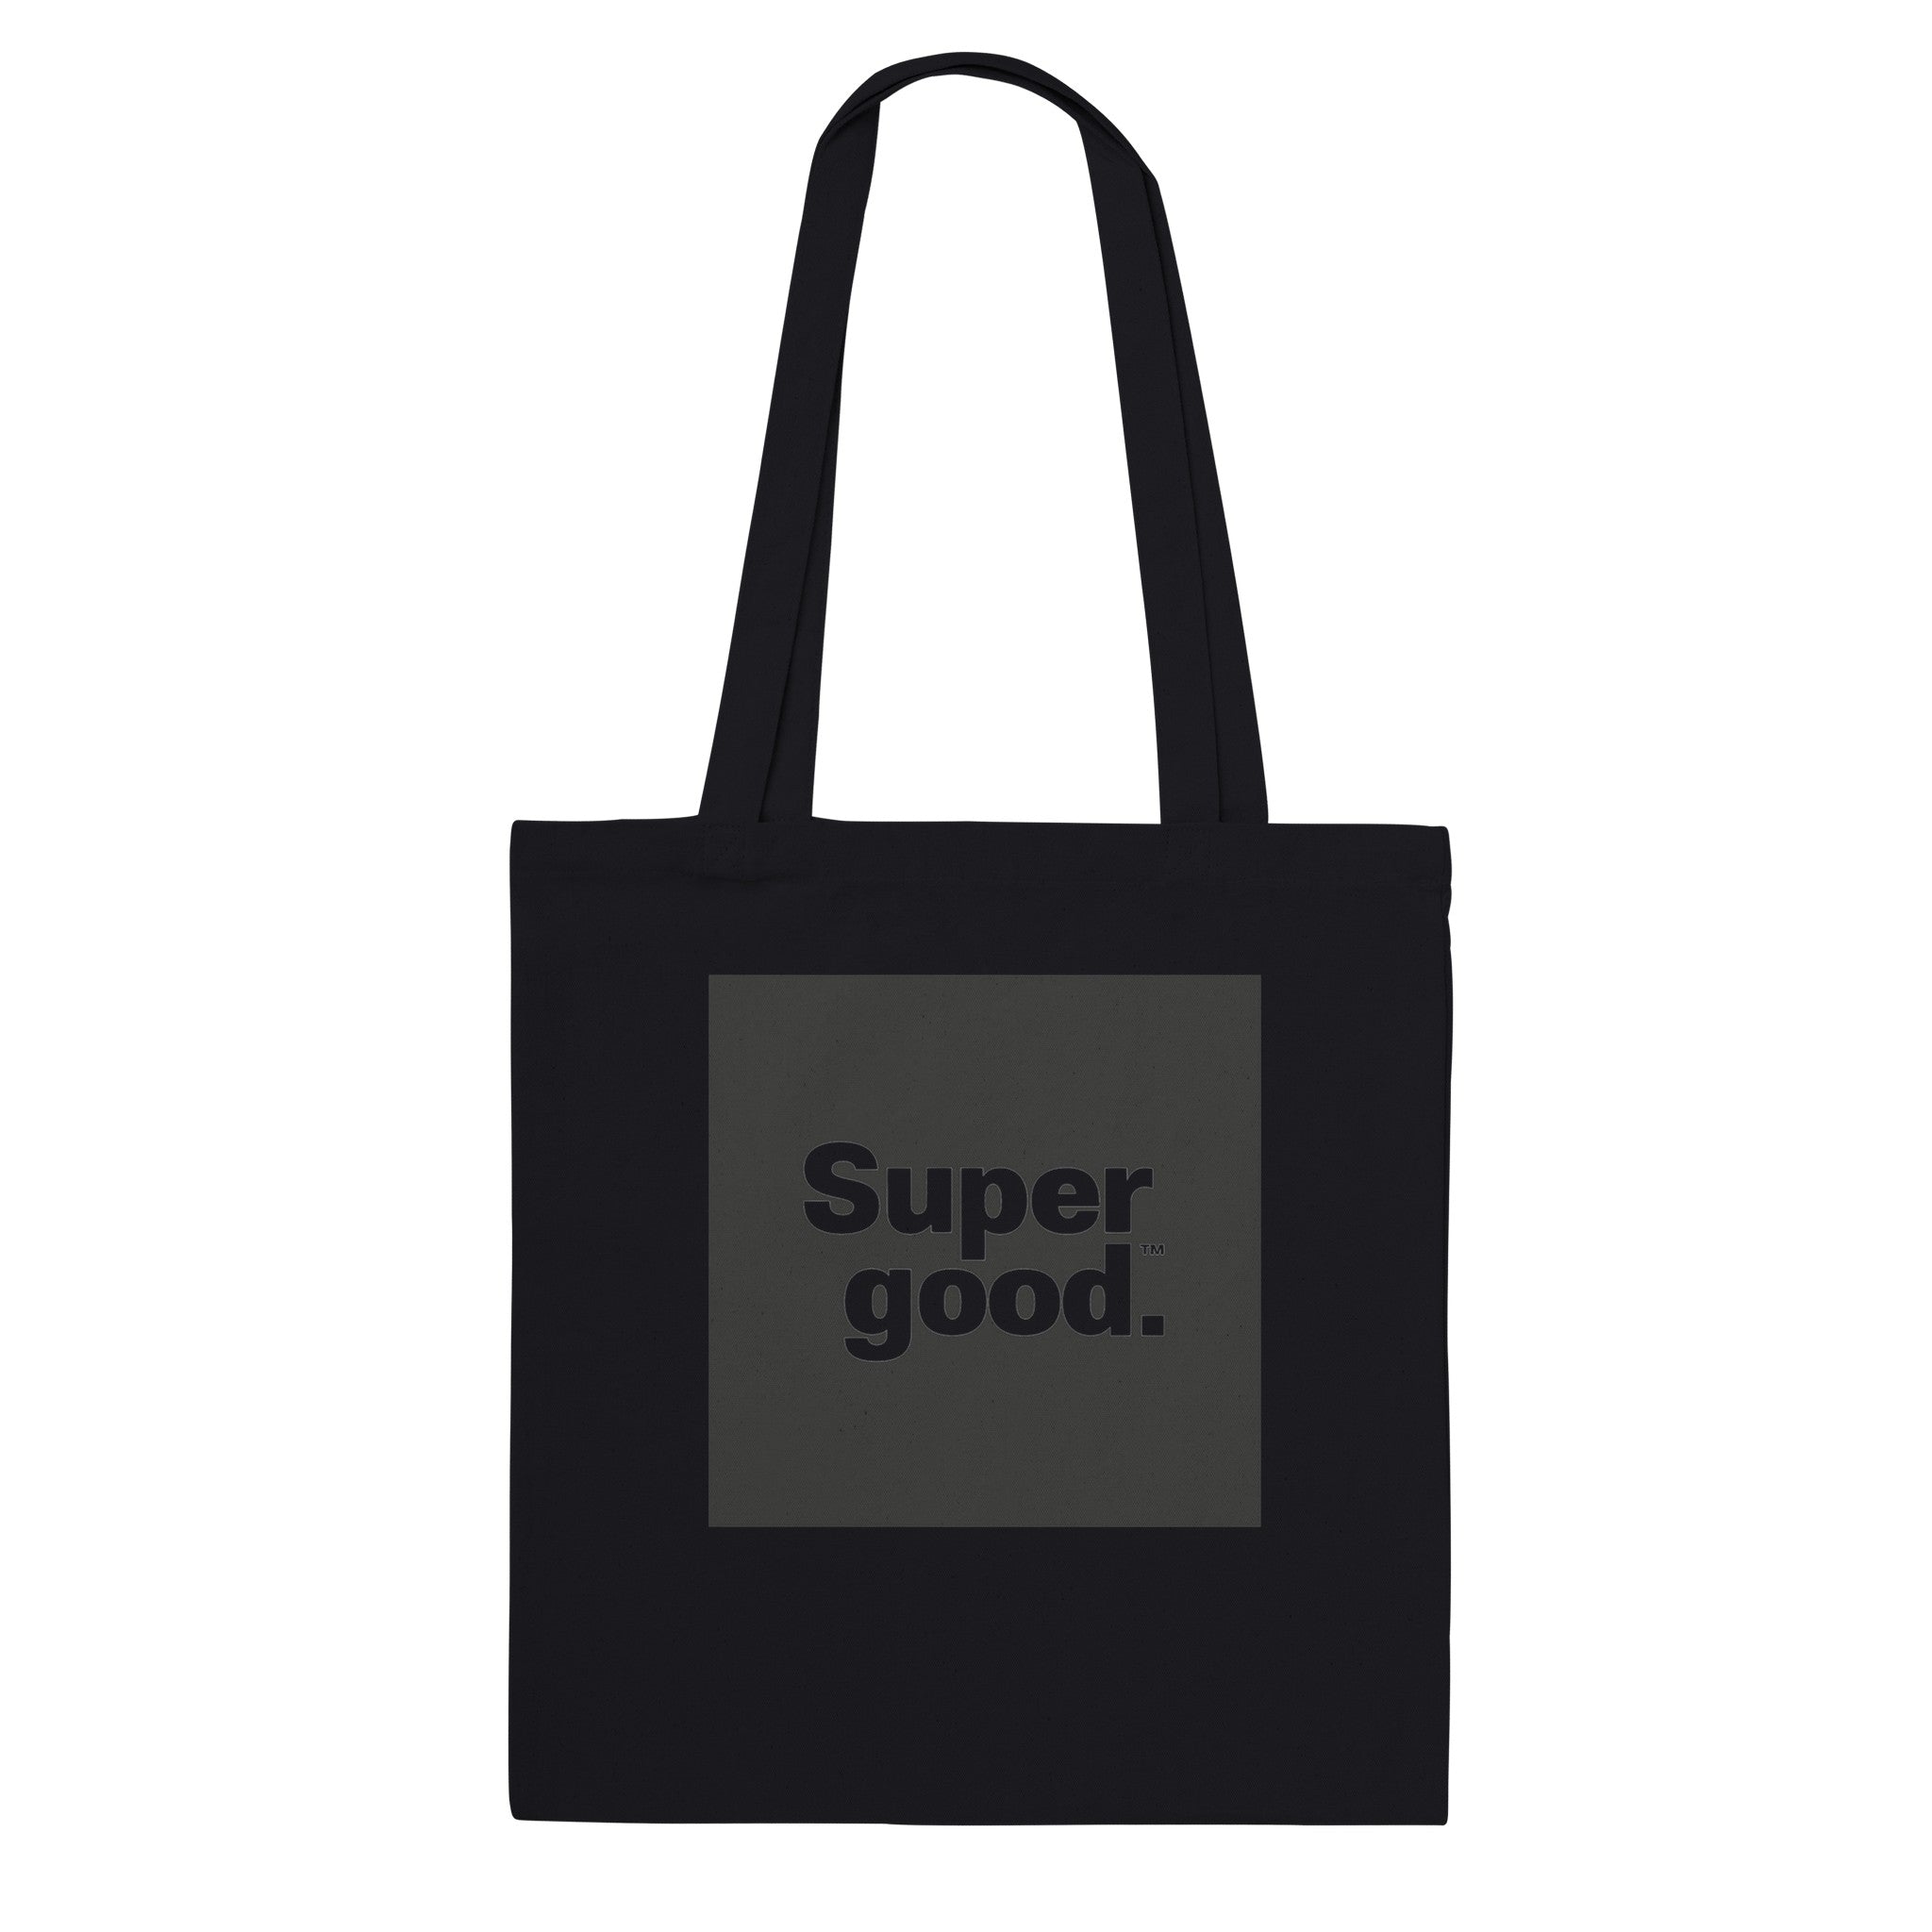 Basic Tote Bag by Supergood.-Supergood.